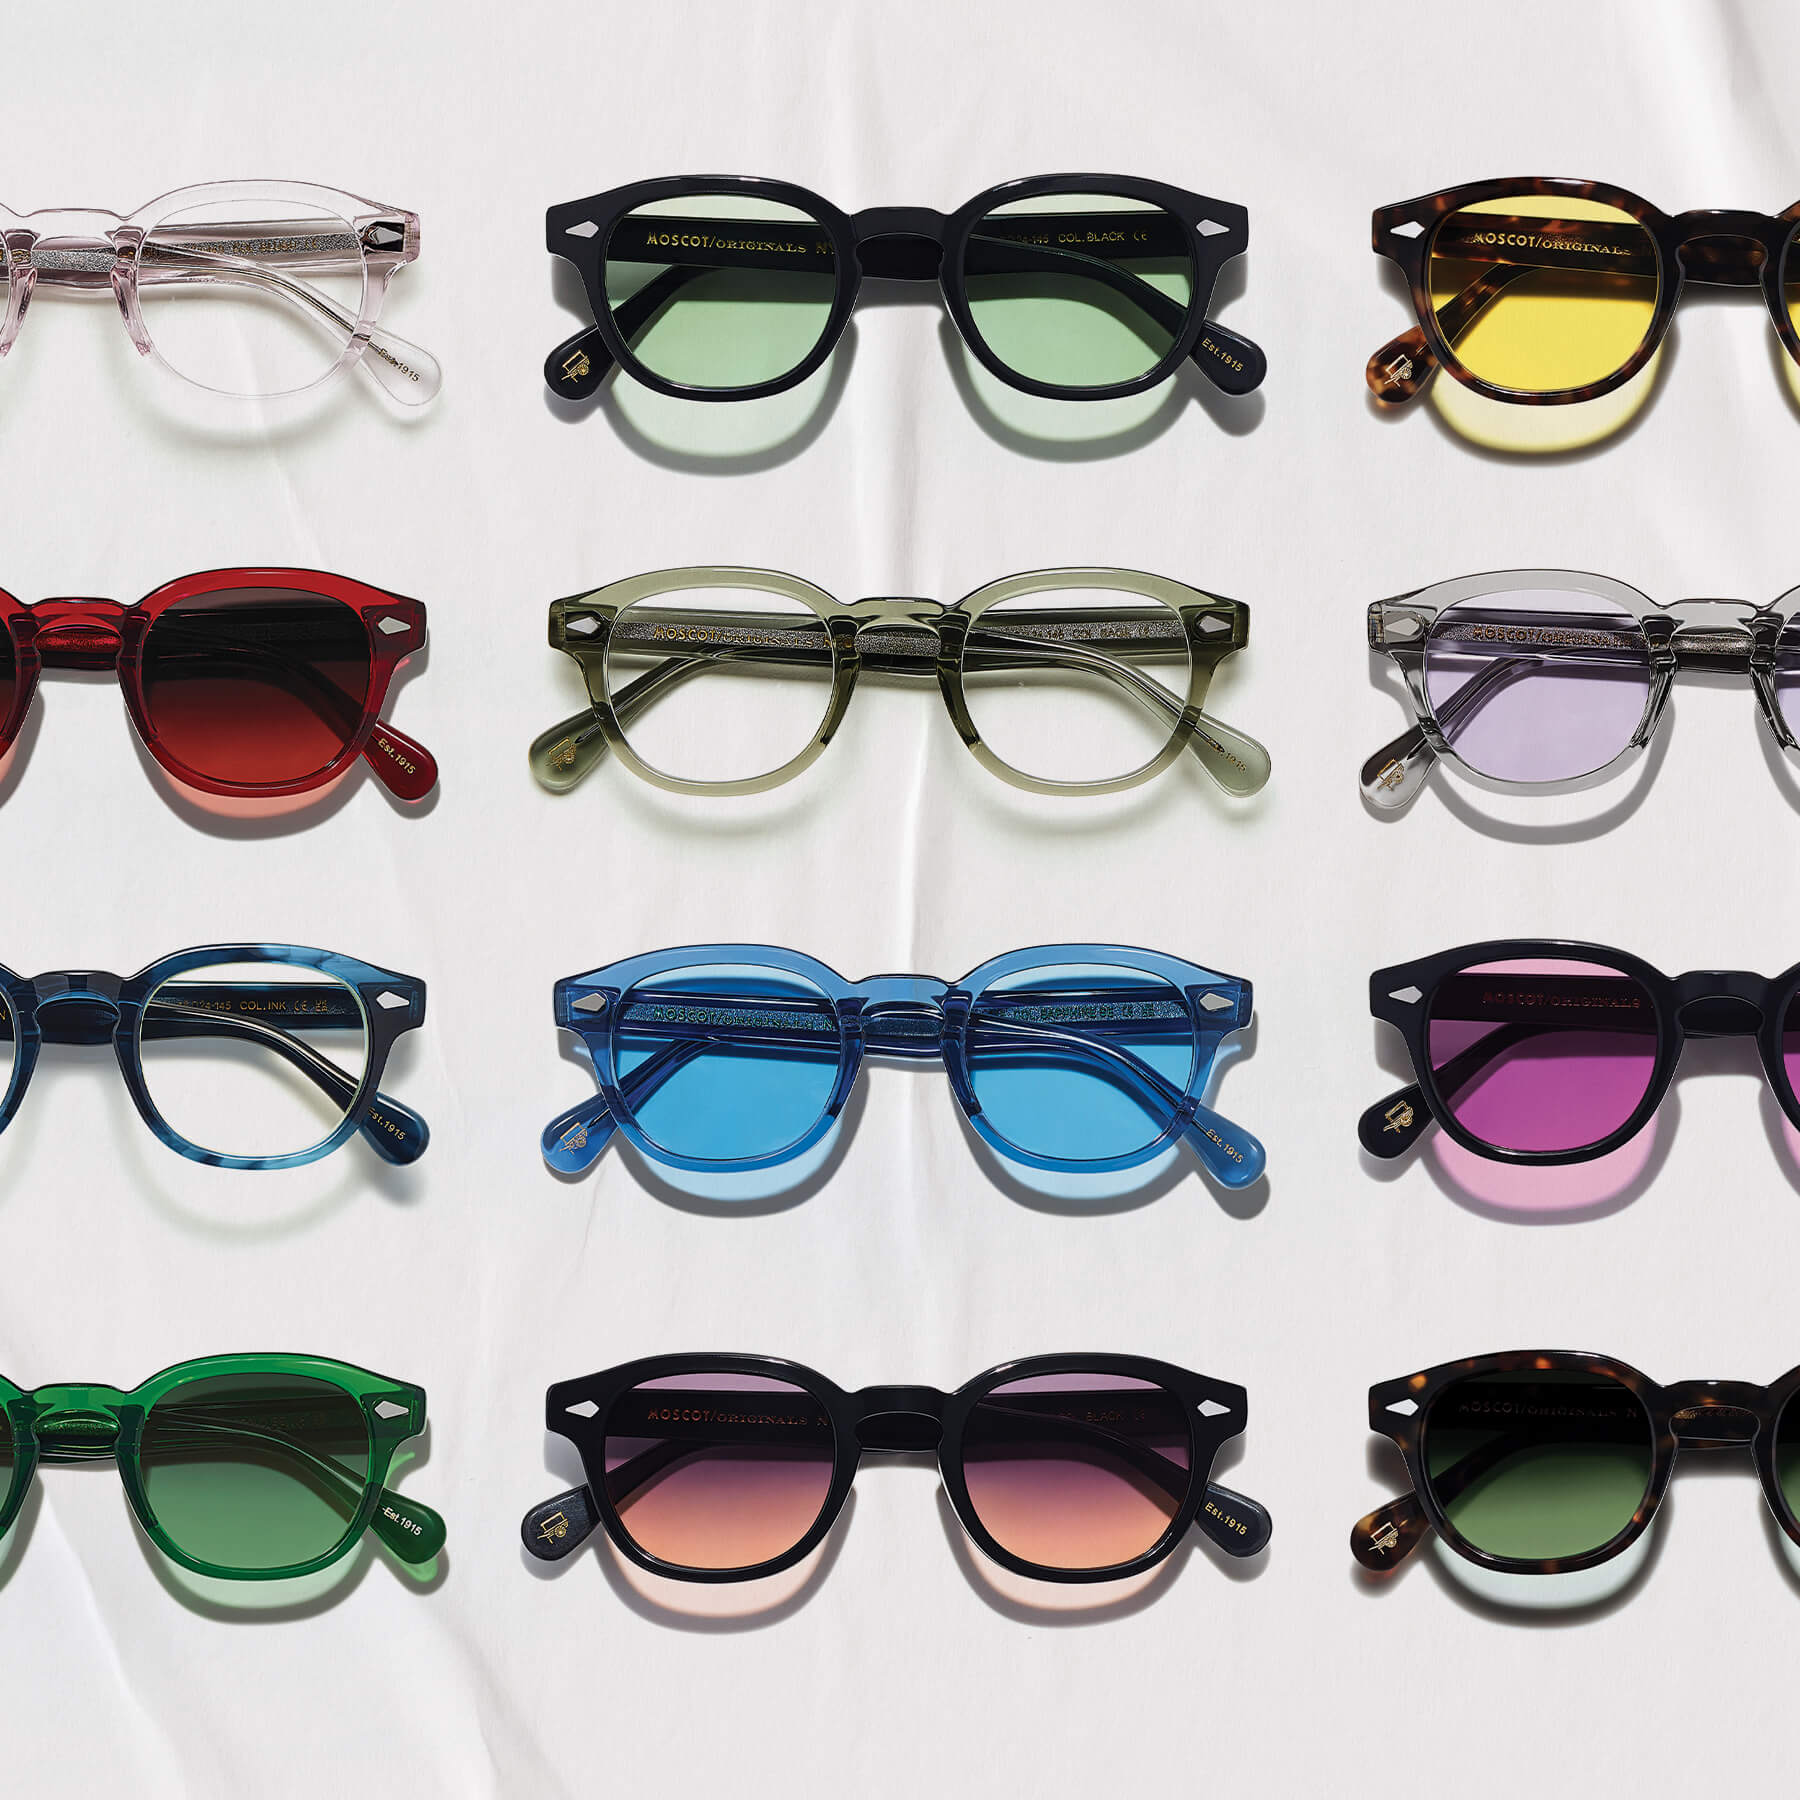 MOSCOT Eyewear - NYC Since 1915 | United States